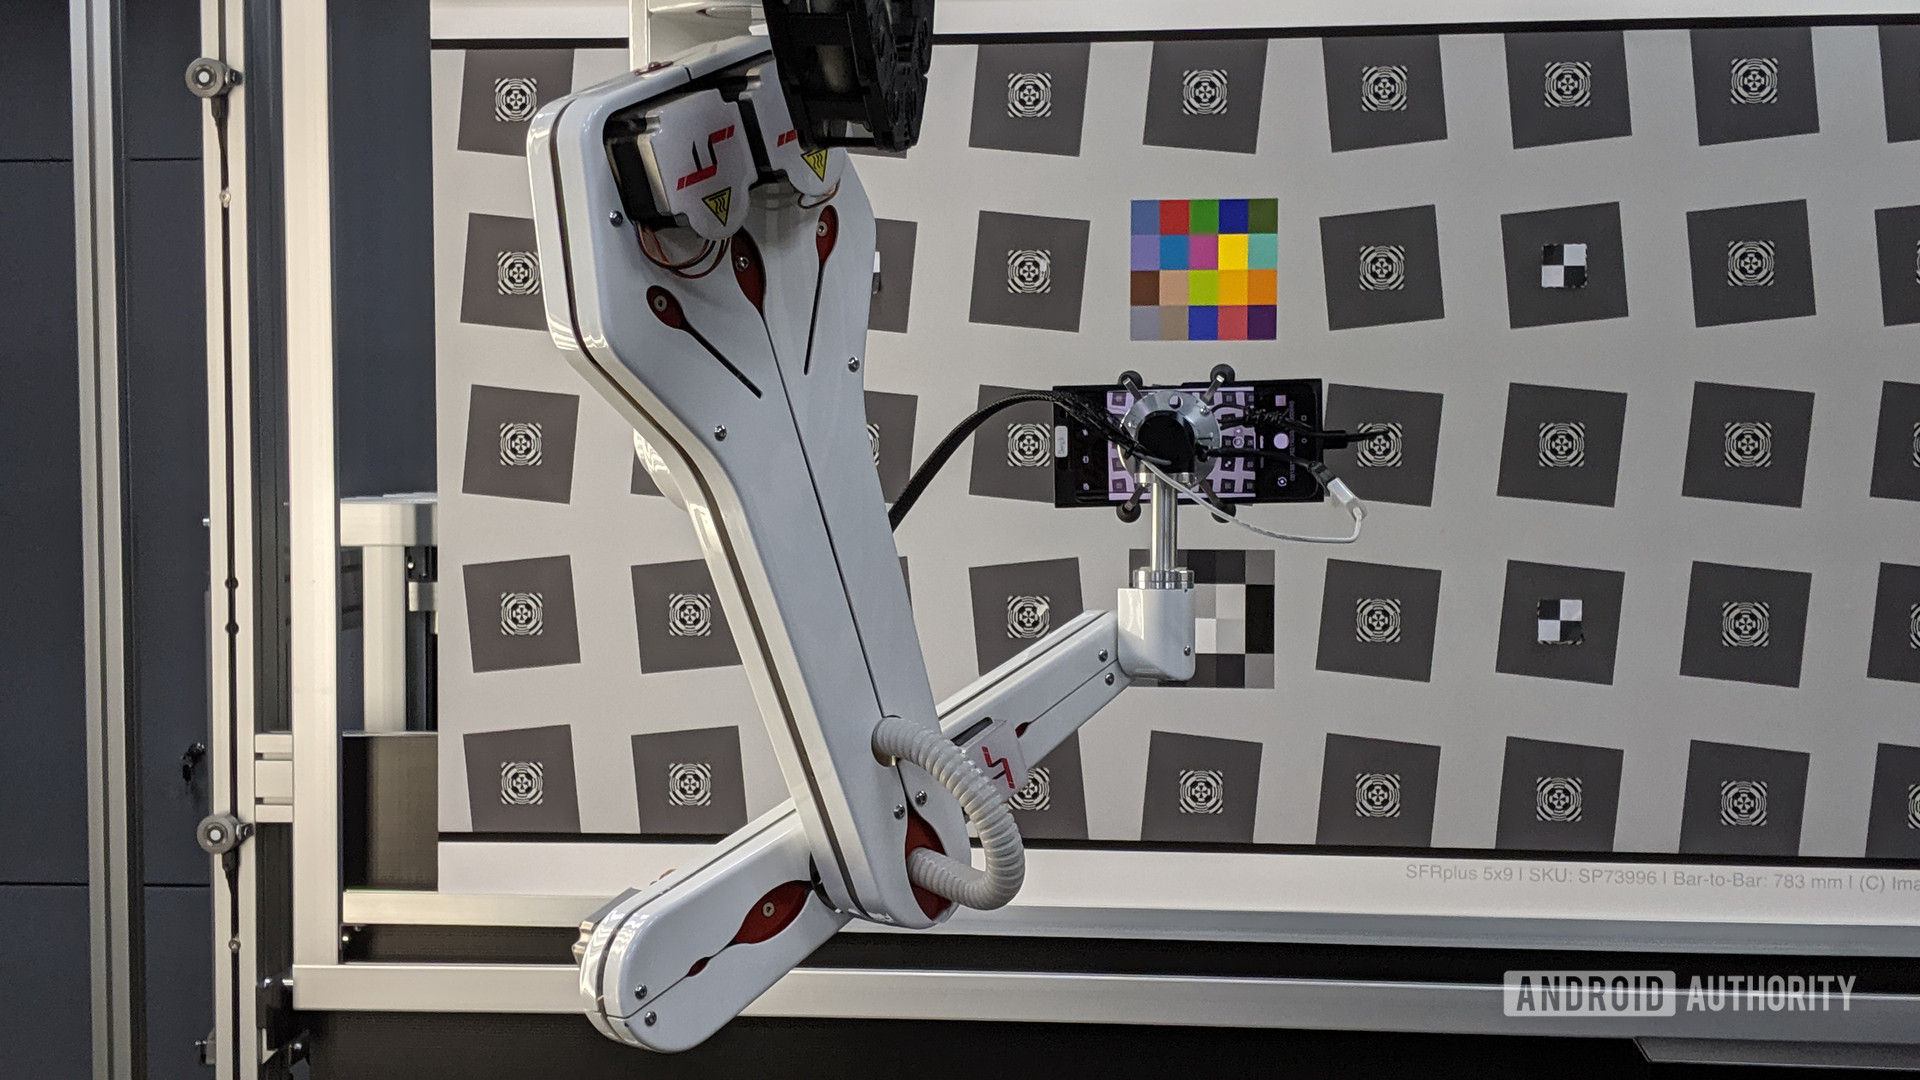 OnePlus摄像头实验室 - 用于模拟多种情况的机器人臂